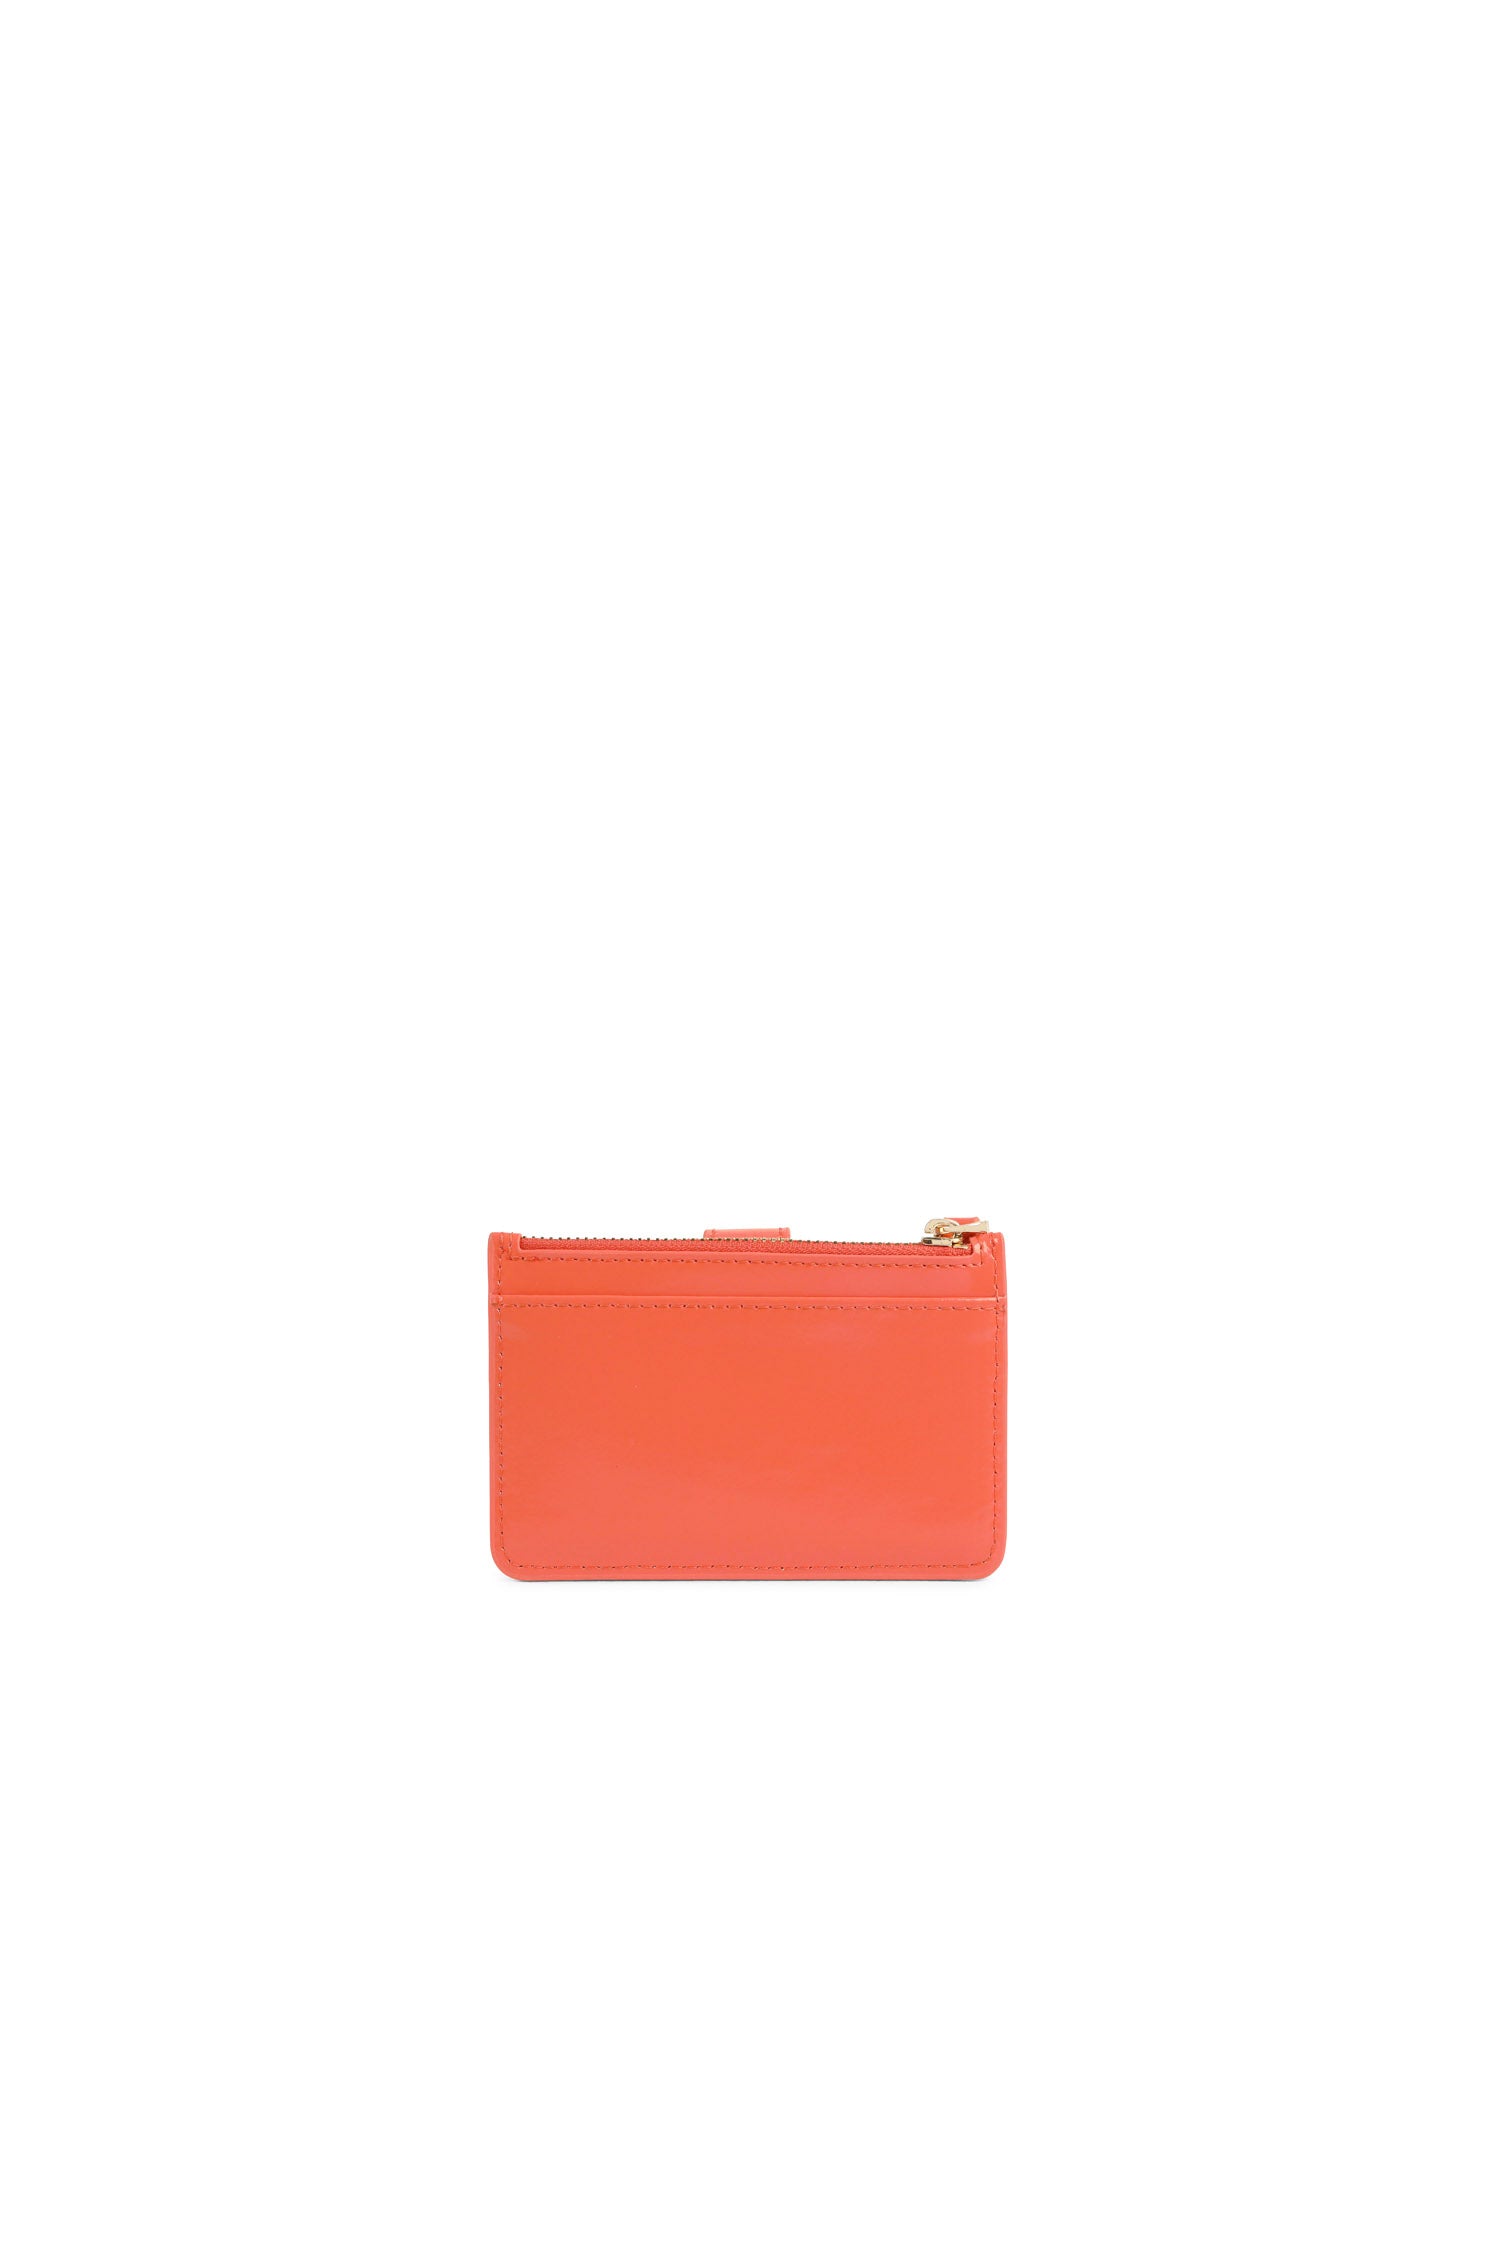 The Zoe Patent Card Wallet Orange Sunset - Gift Edit